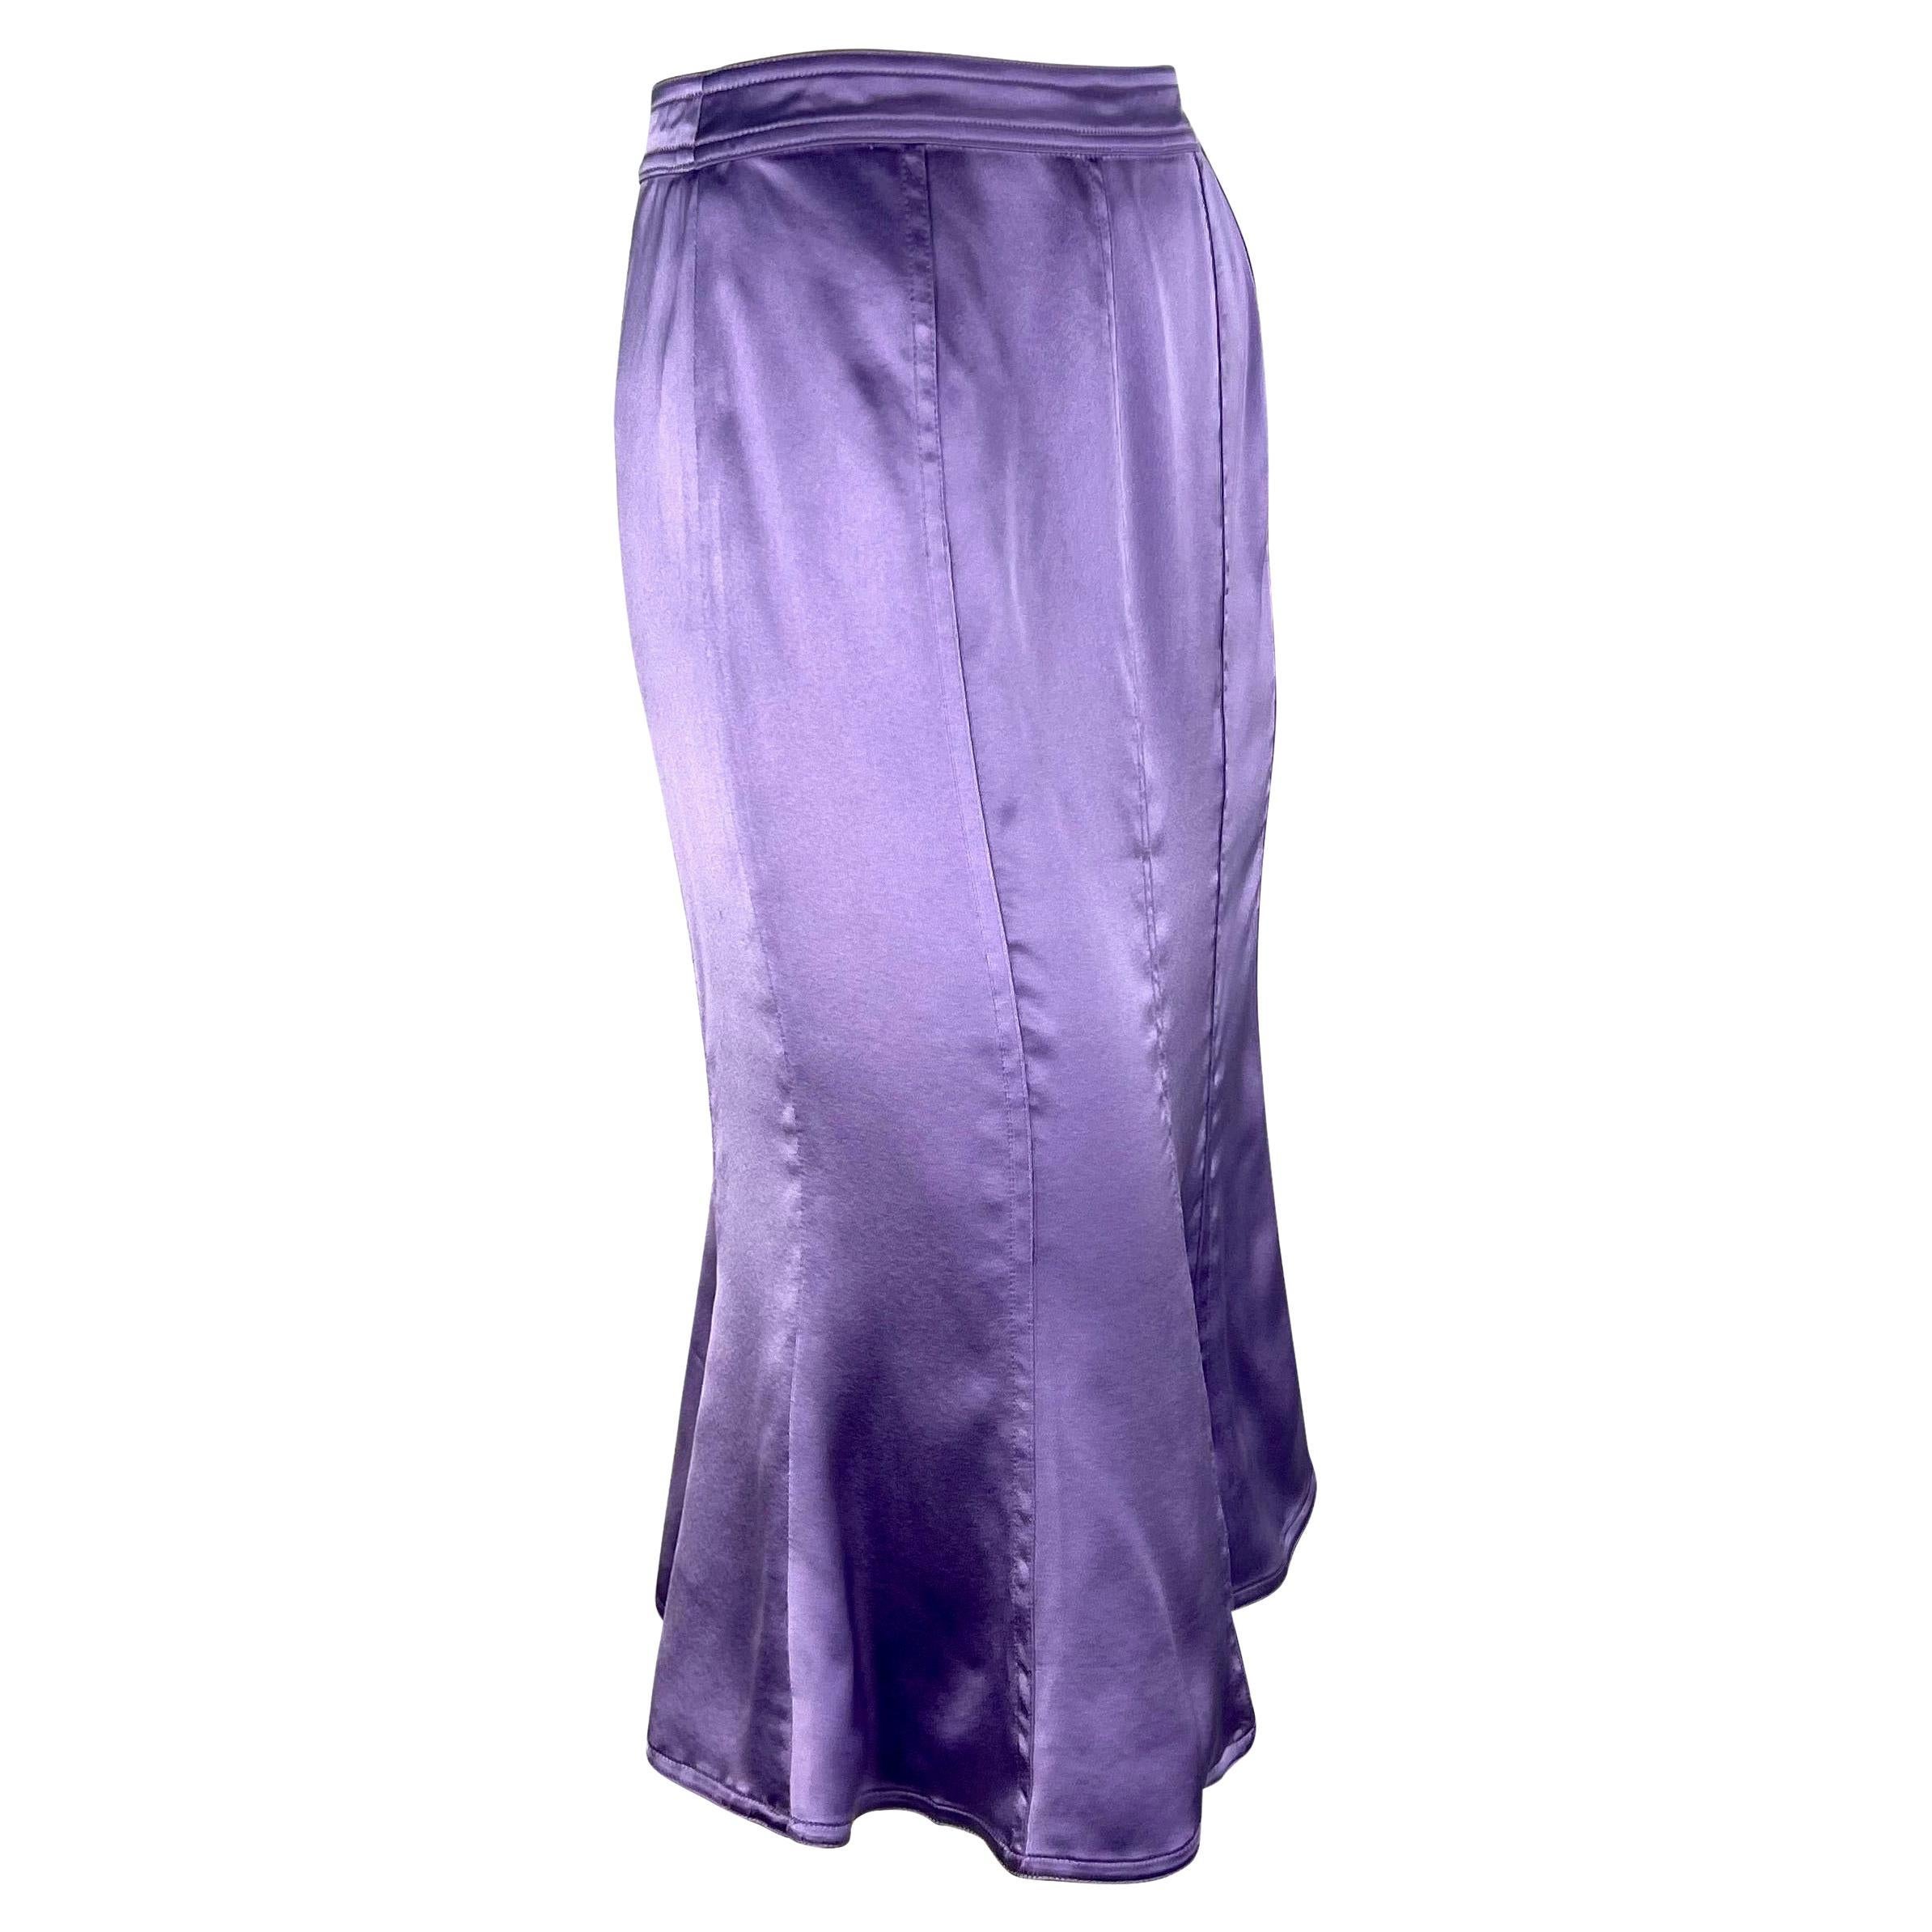 F/W 2003 Yves Saint Laurent by Tom Ford Lavender Silk Satin Flare Skirt For Sale 1